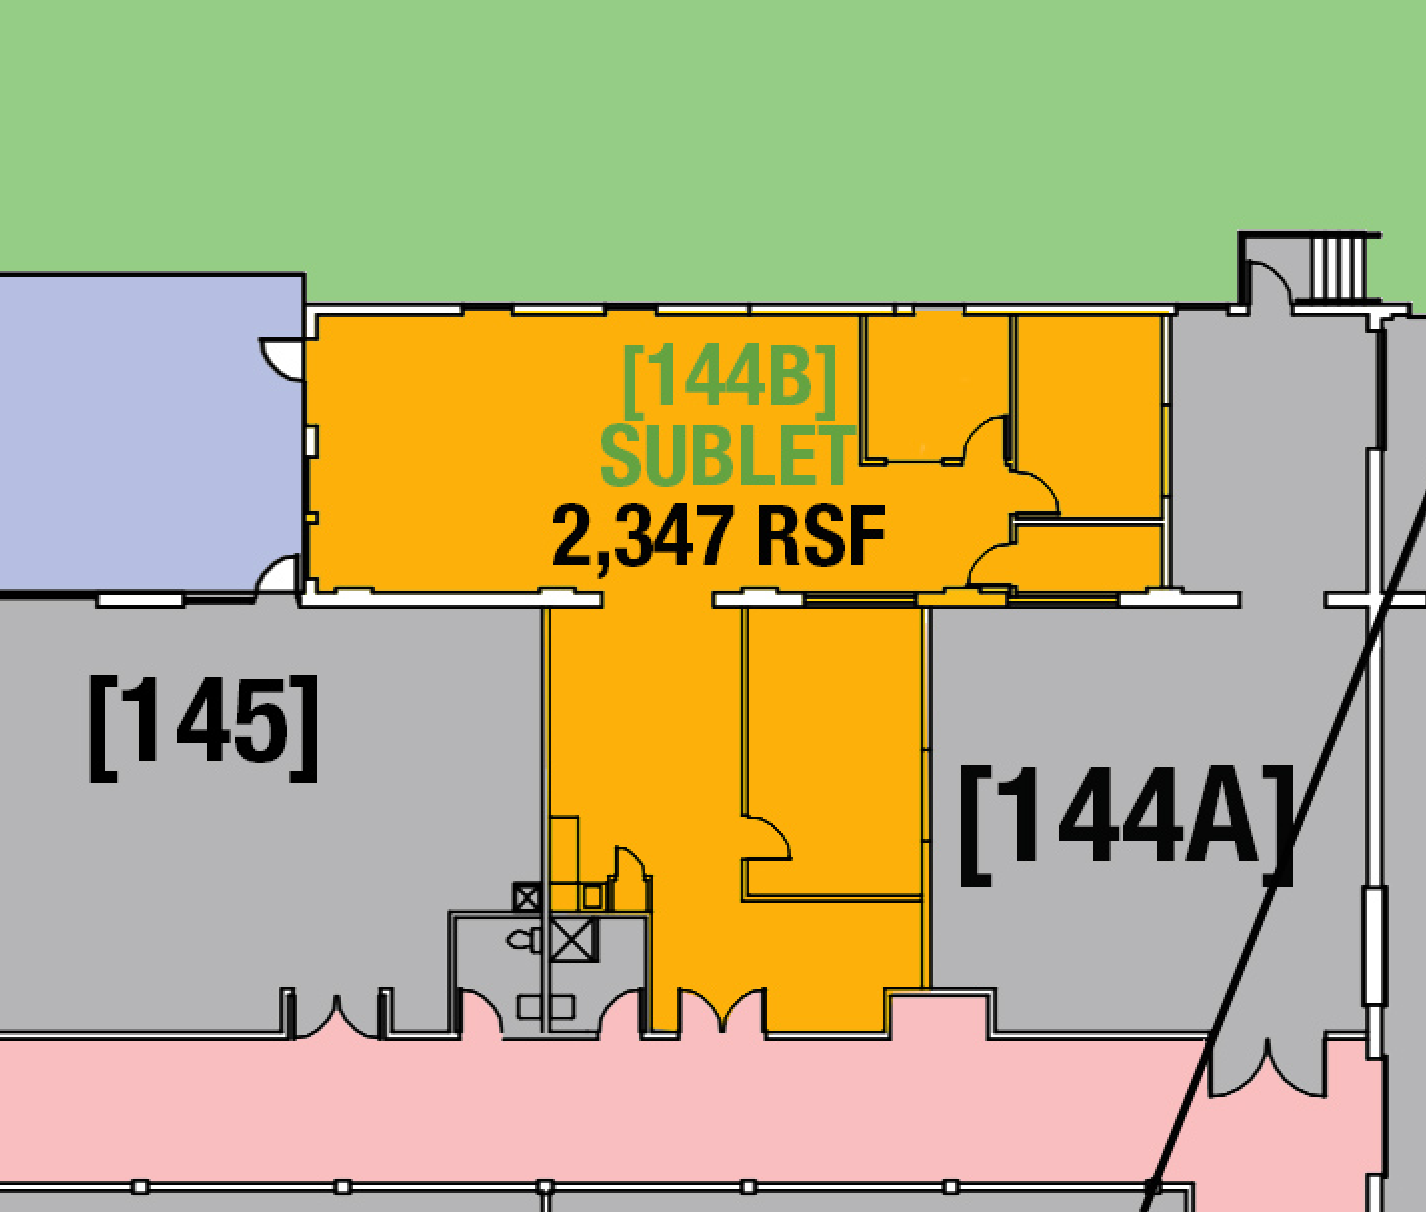 SUITE 136 – 3,479 RSF